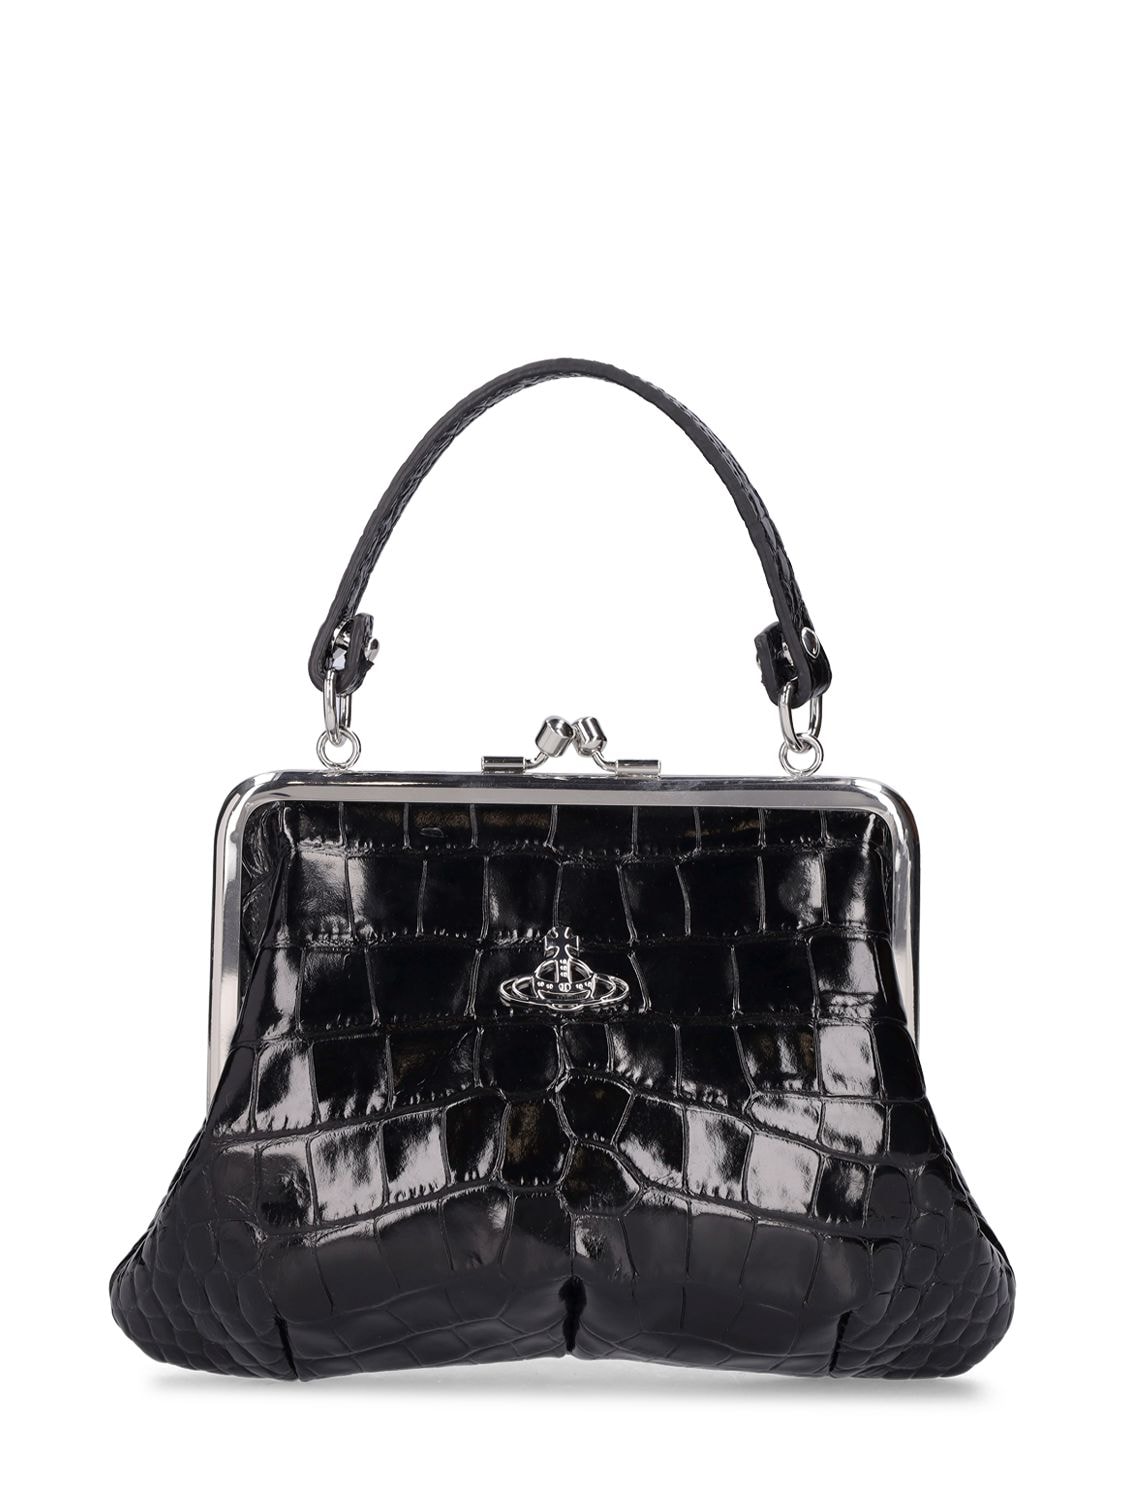 Vivienne Westwood Granny Frame Croc Embossed Leather Bag In Black